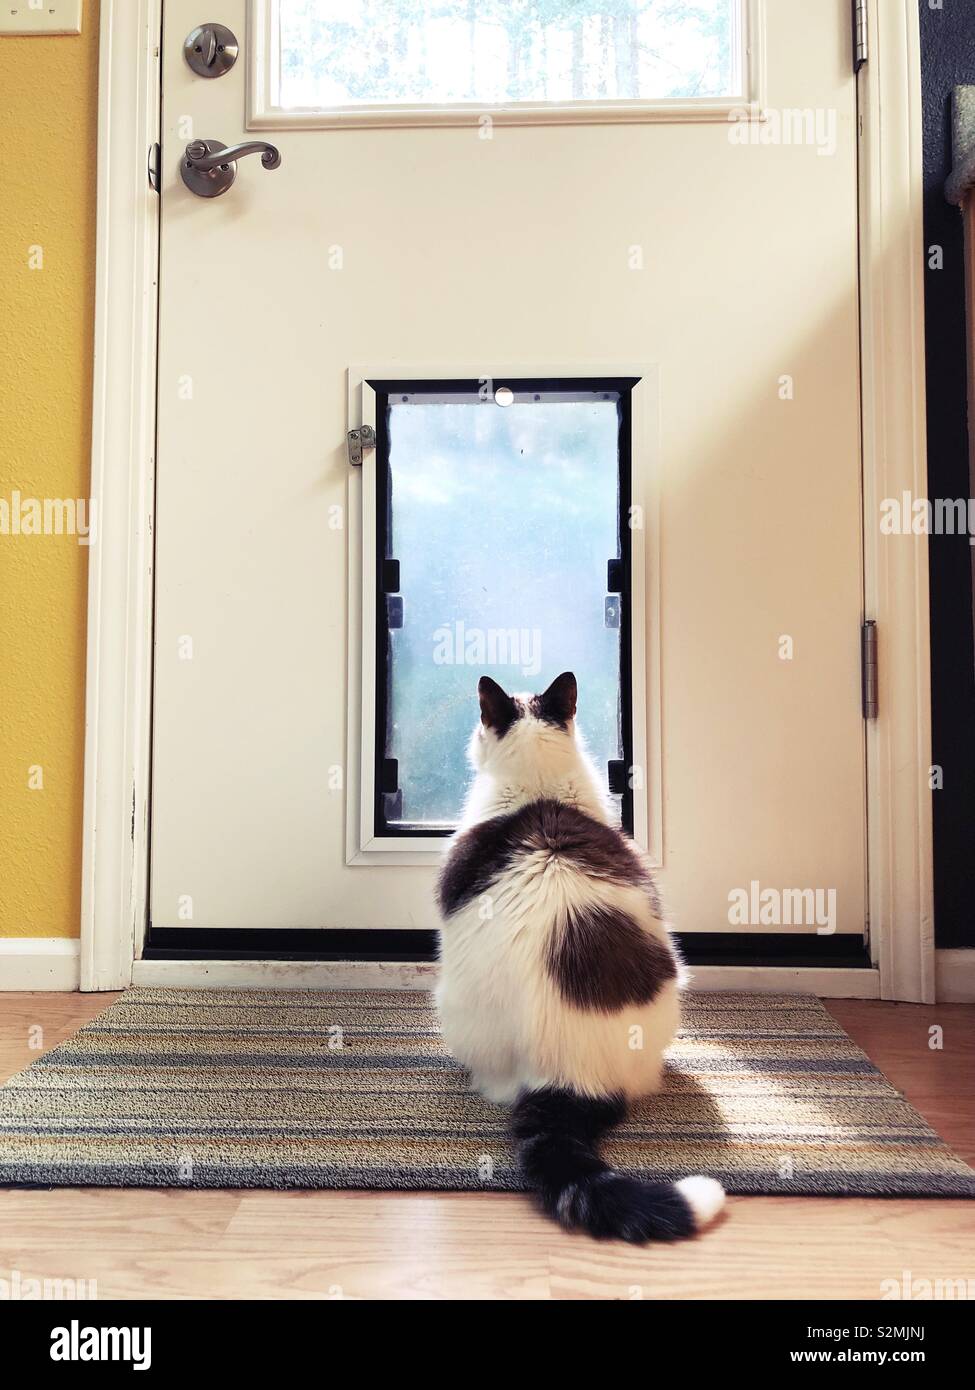 A cat looking at a pet door. Stock Photo